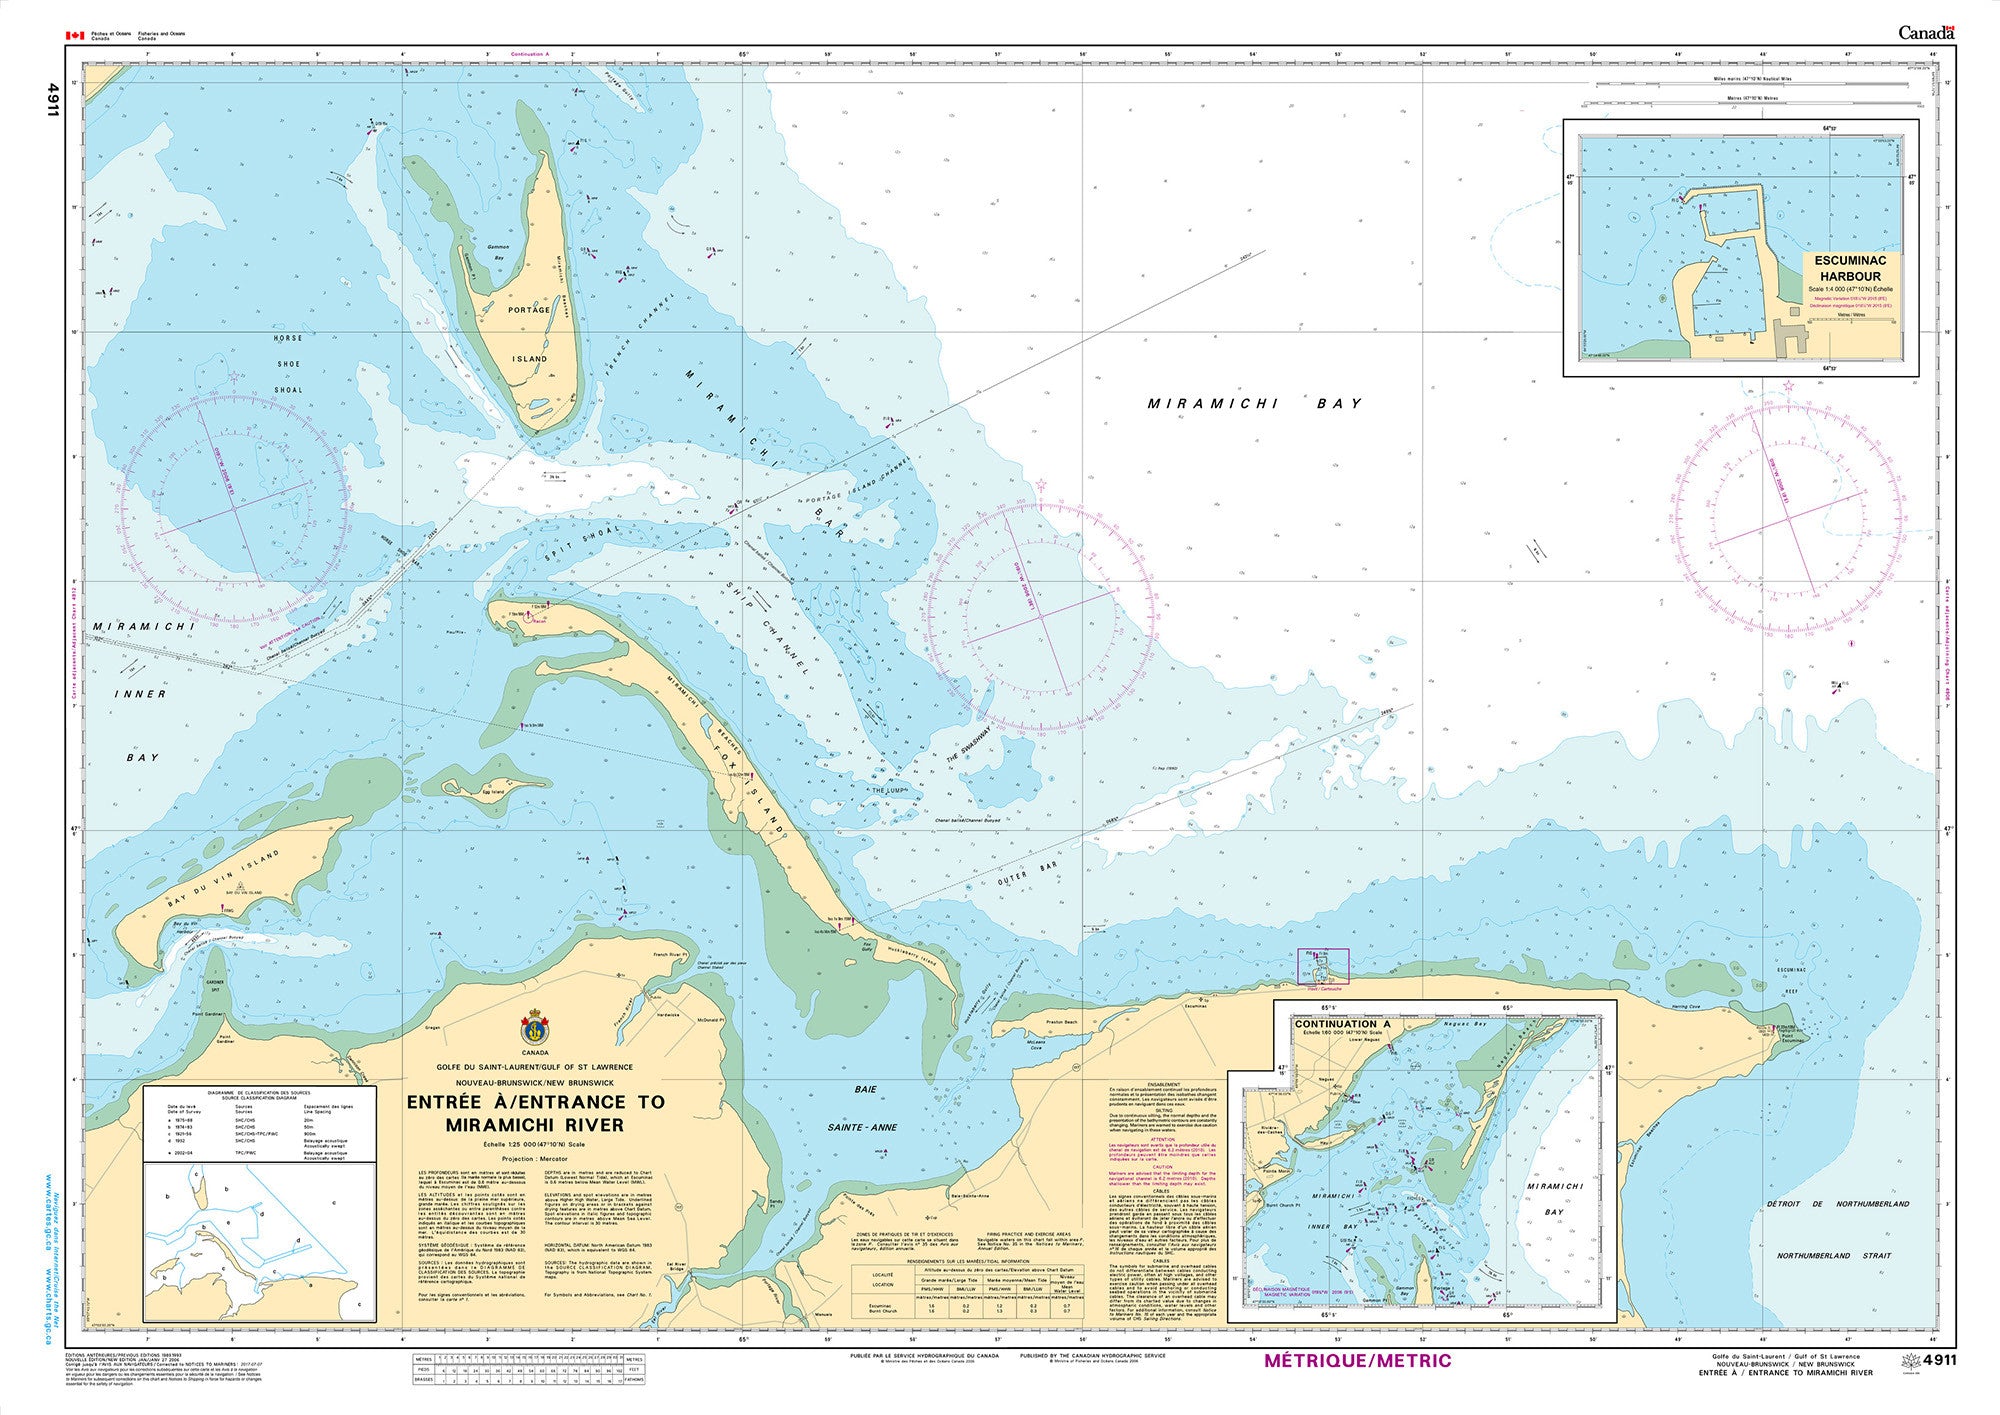 Canadian Hydrographic Service Nautical Chart CHS4911: Entrée à/Entrance to Miramichi River